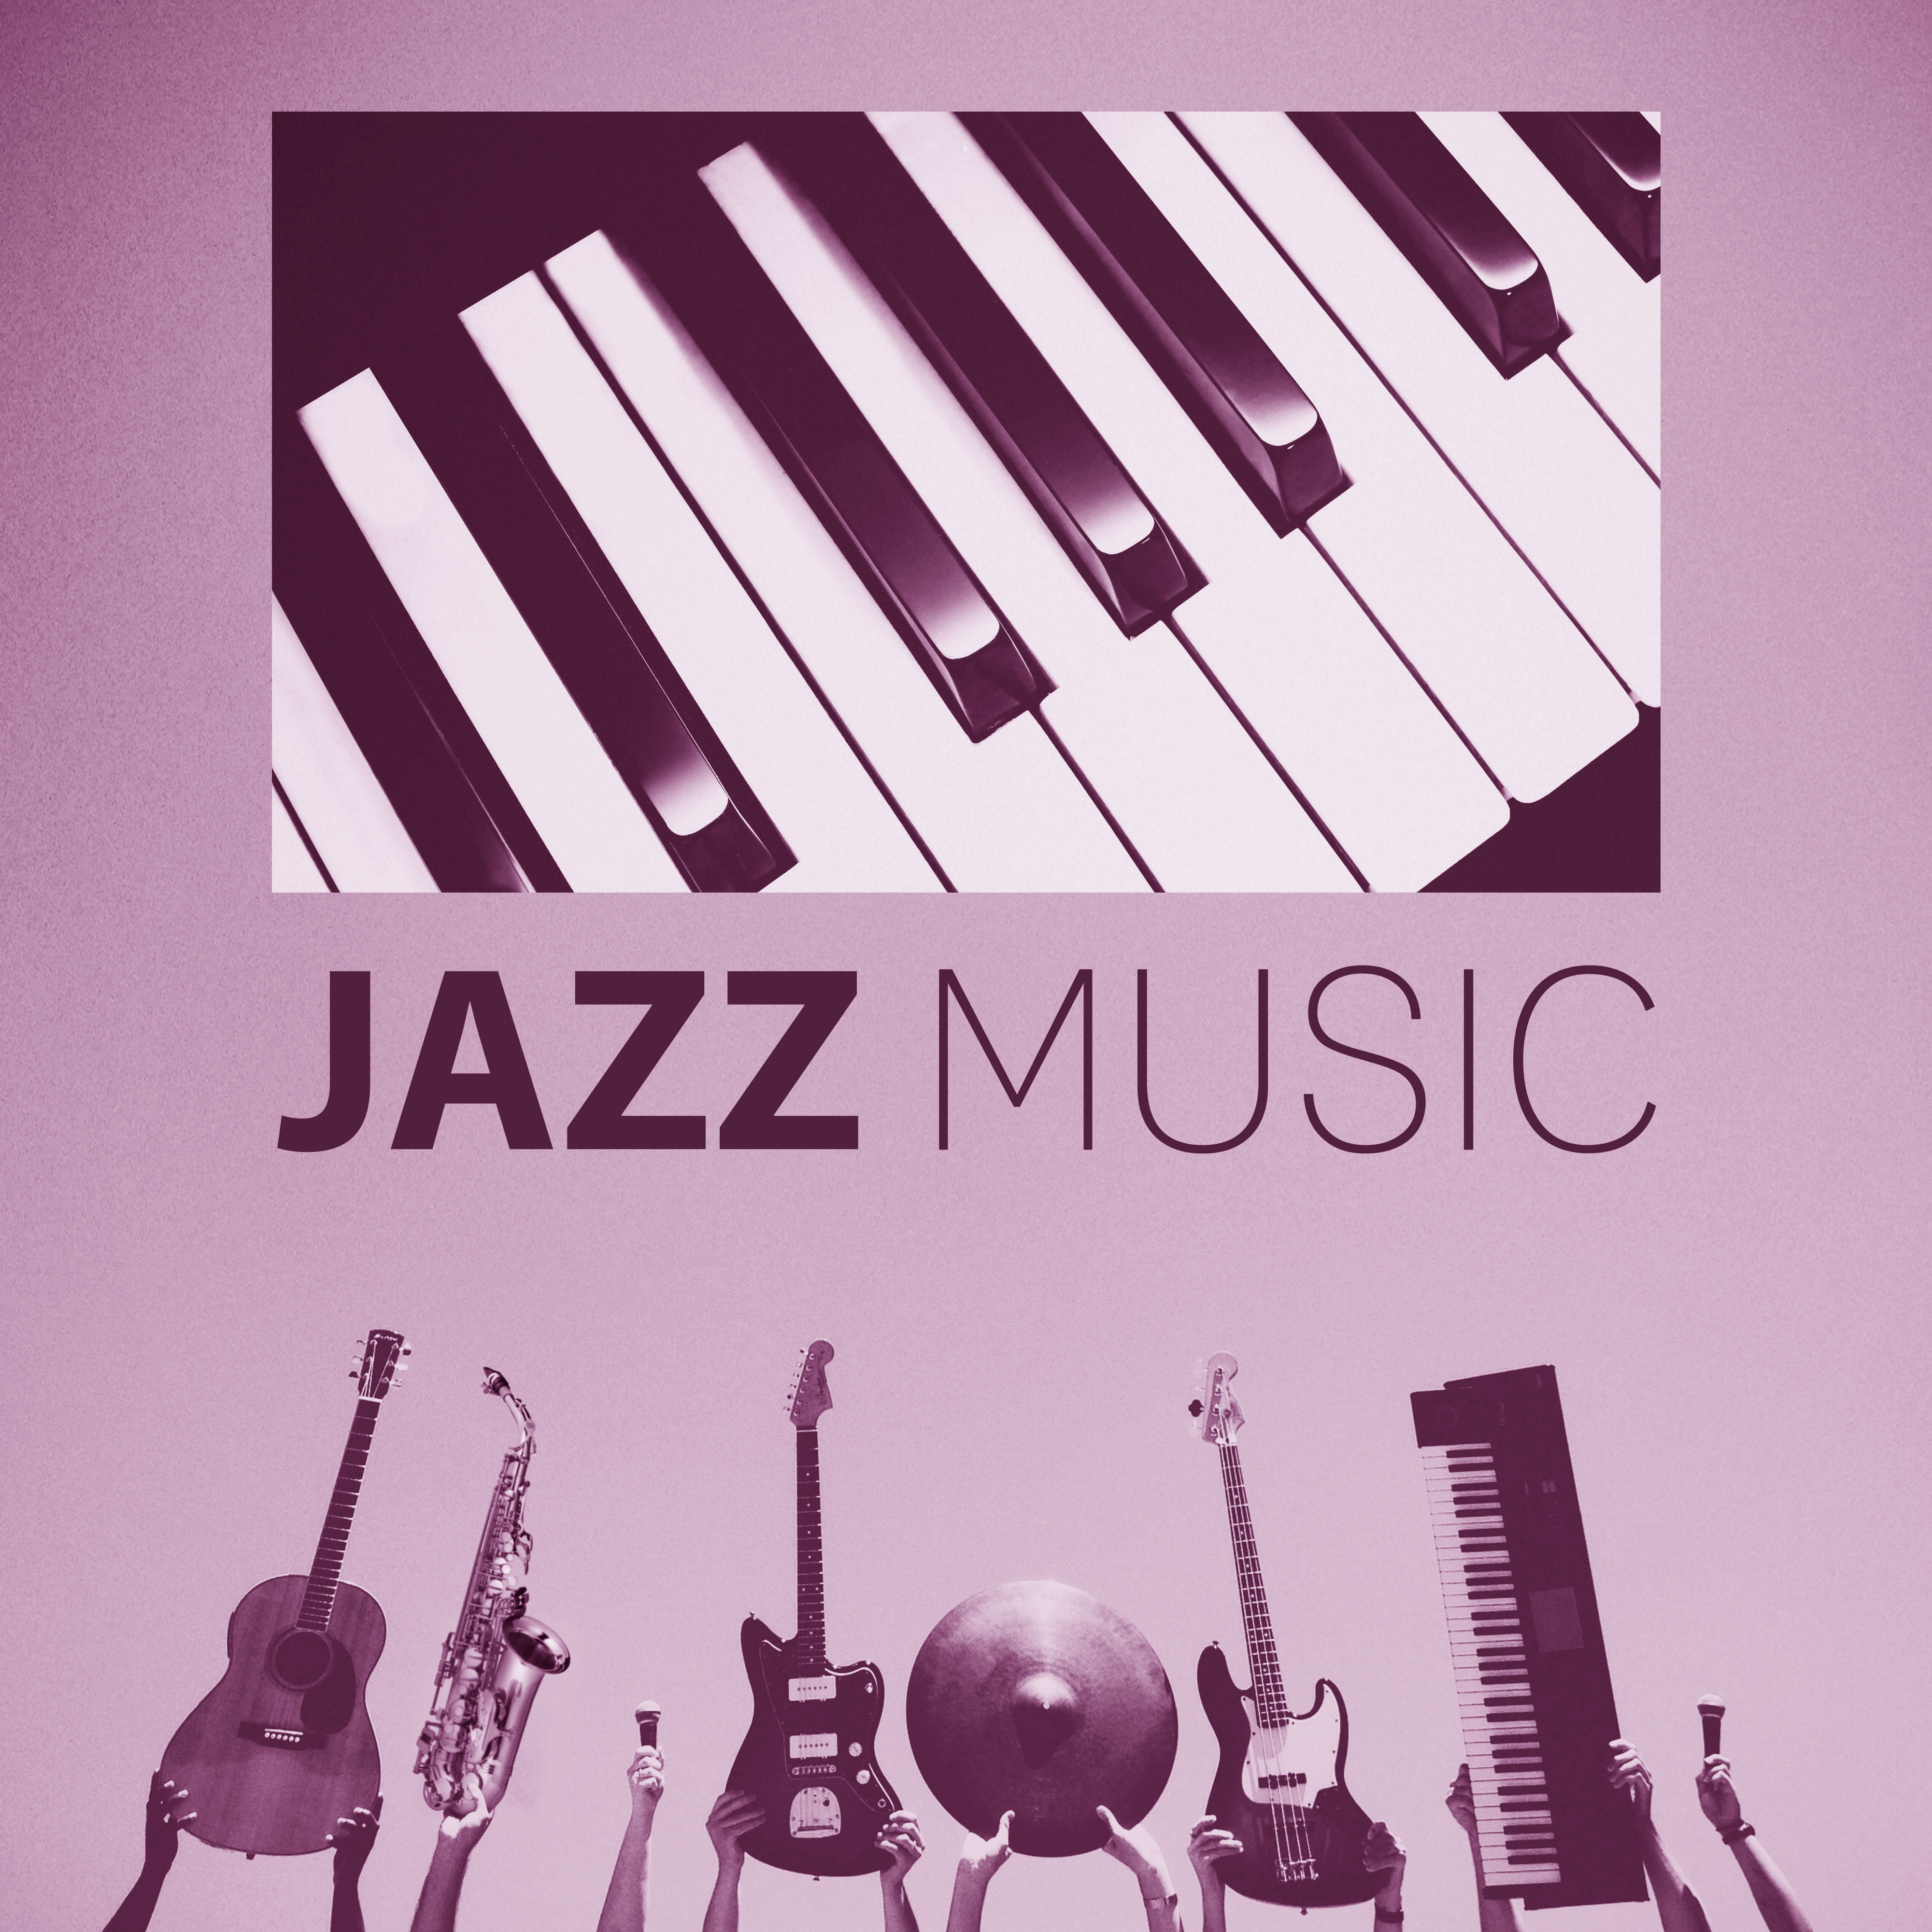 Jazz Music - Cool Jazz, **** Jazz Lounge, Jazz Temple